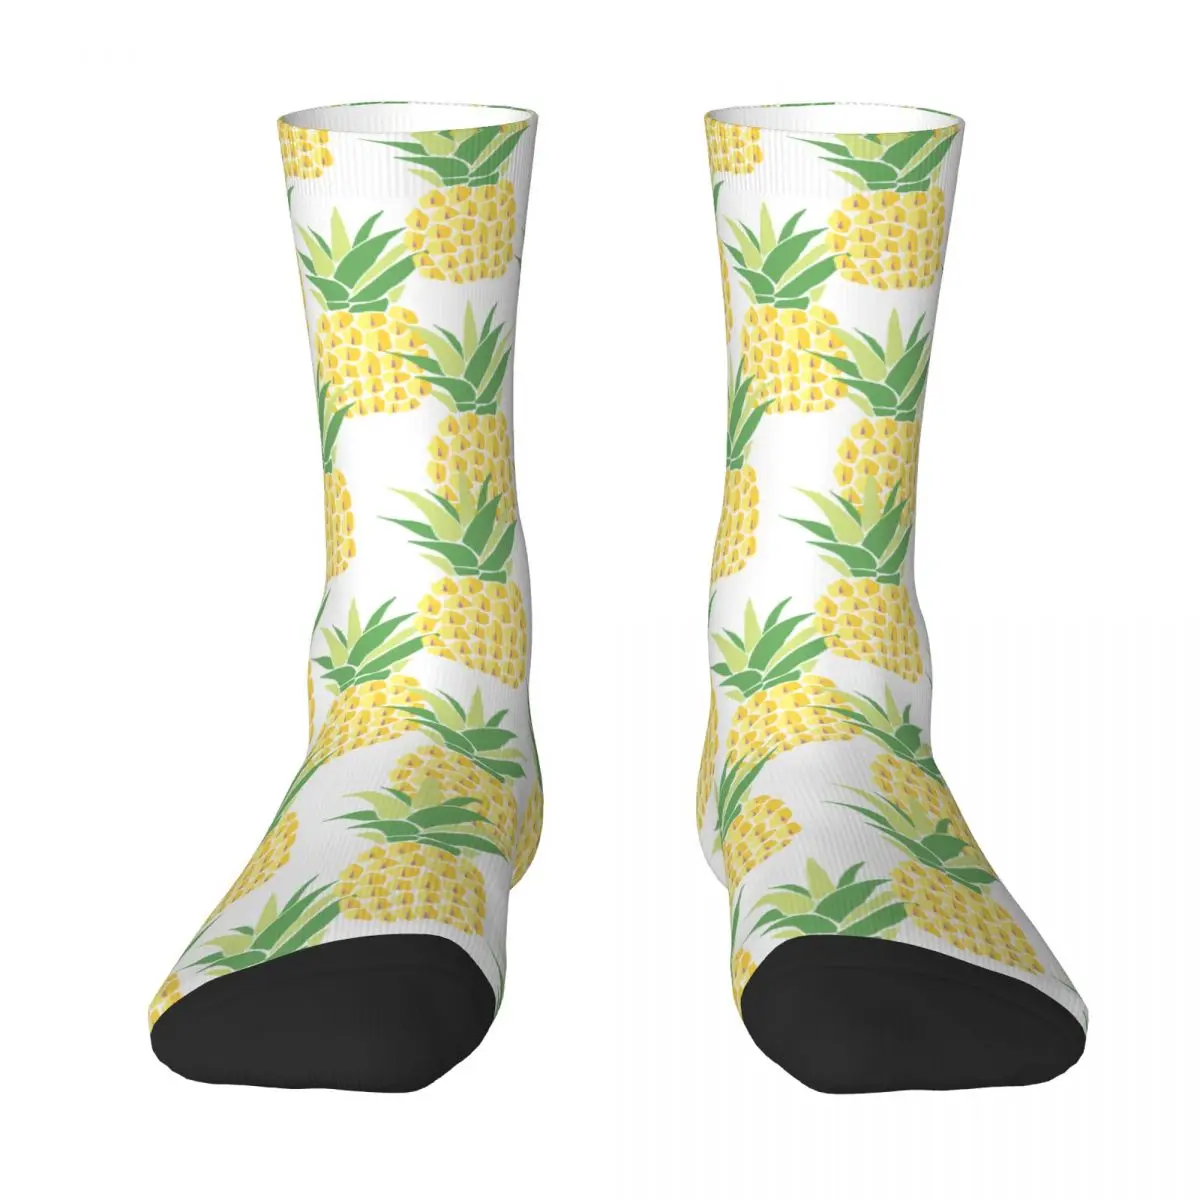 Contracted And Pineapple Adult Socks Pineapple,simplicity, plants, texture Unisex socks,men Socks women Socks